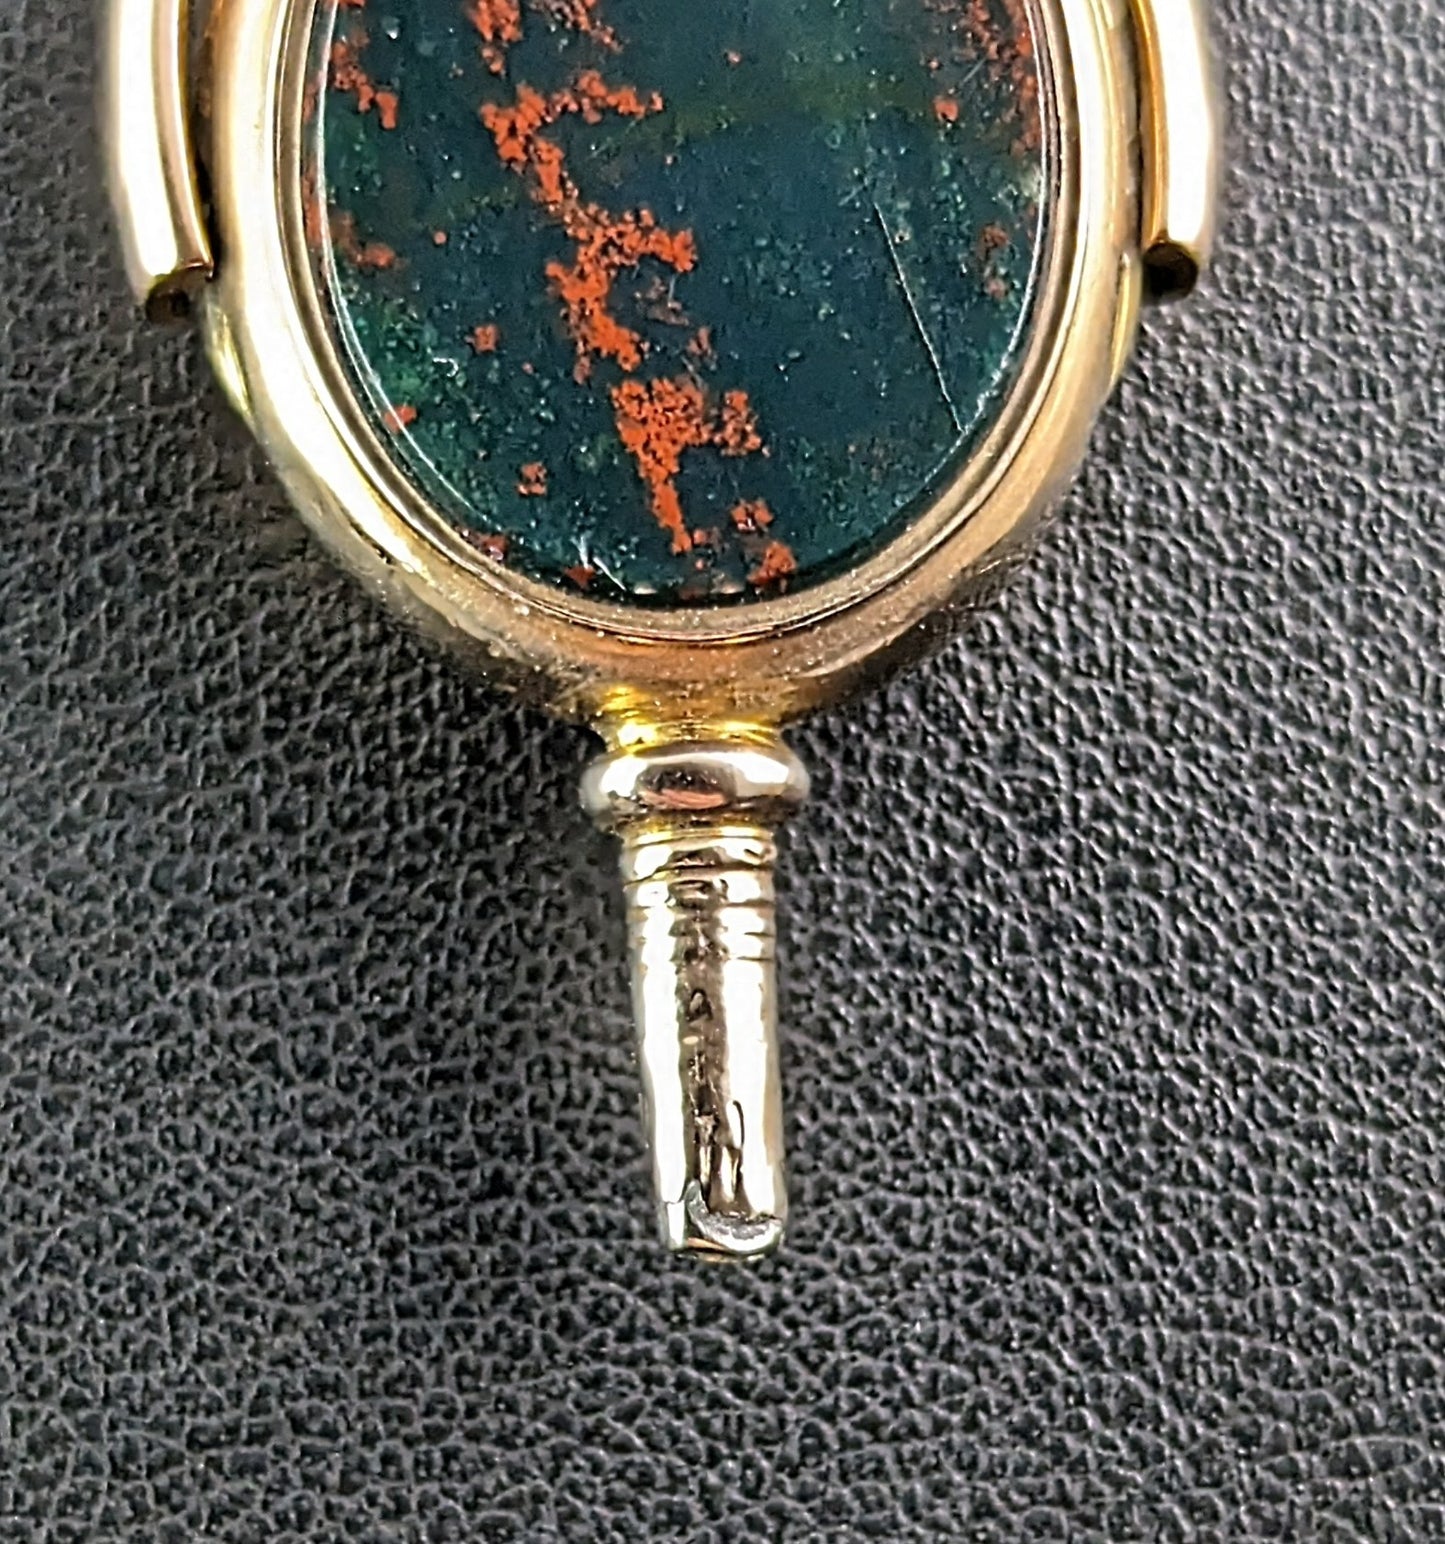 Antique 10ct gold Watch key swivel fob pendant, Bloodstone and Carnelian